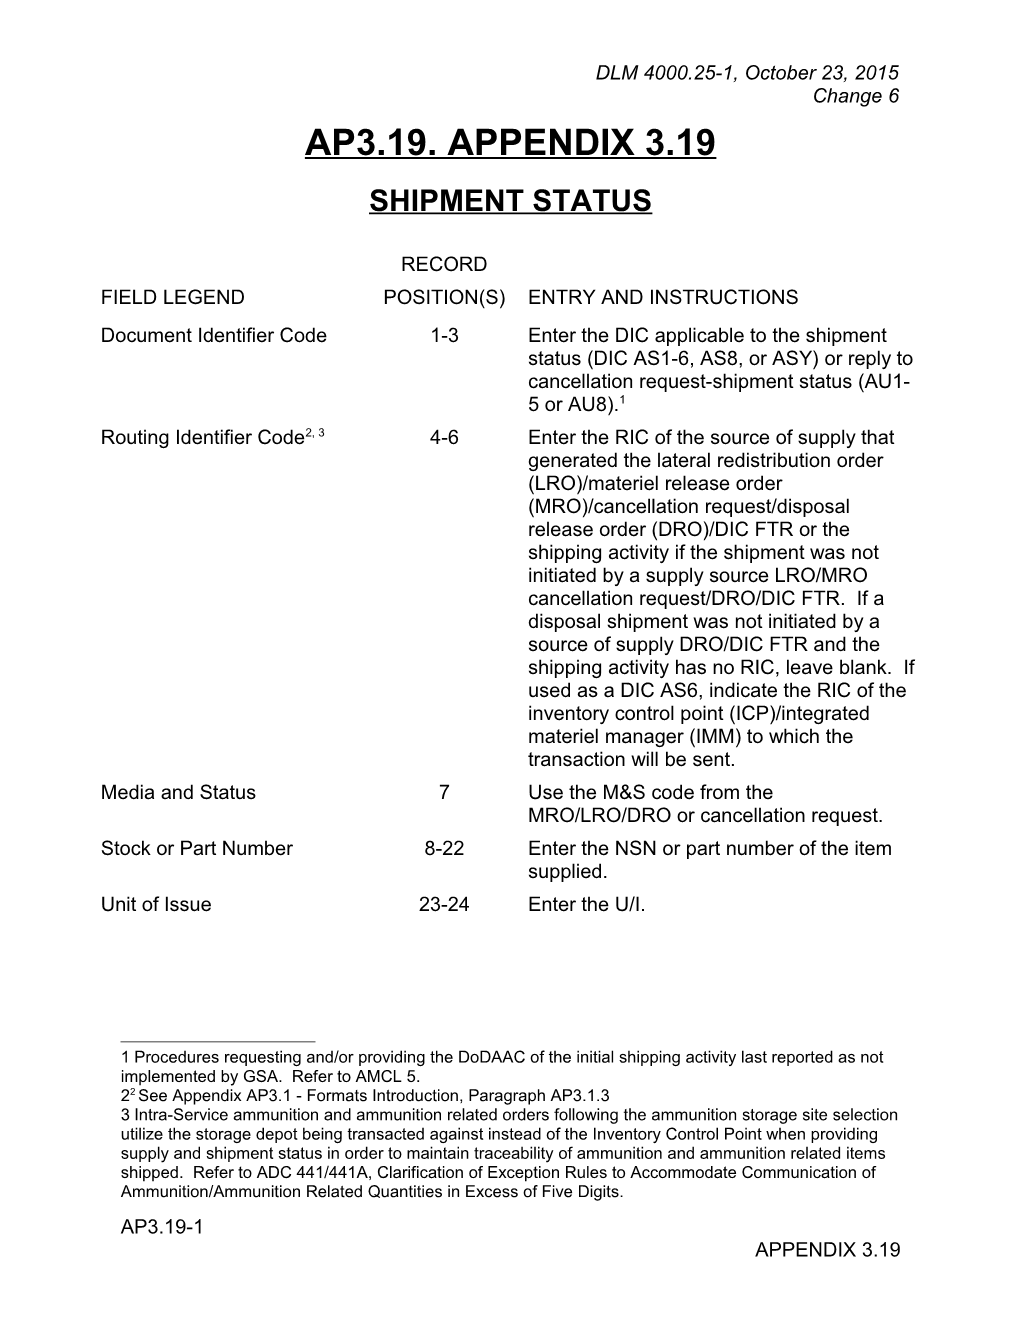 Appendix 3.19 - Shipment Status